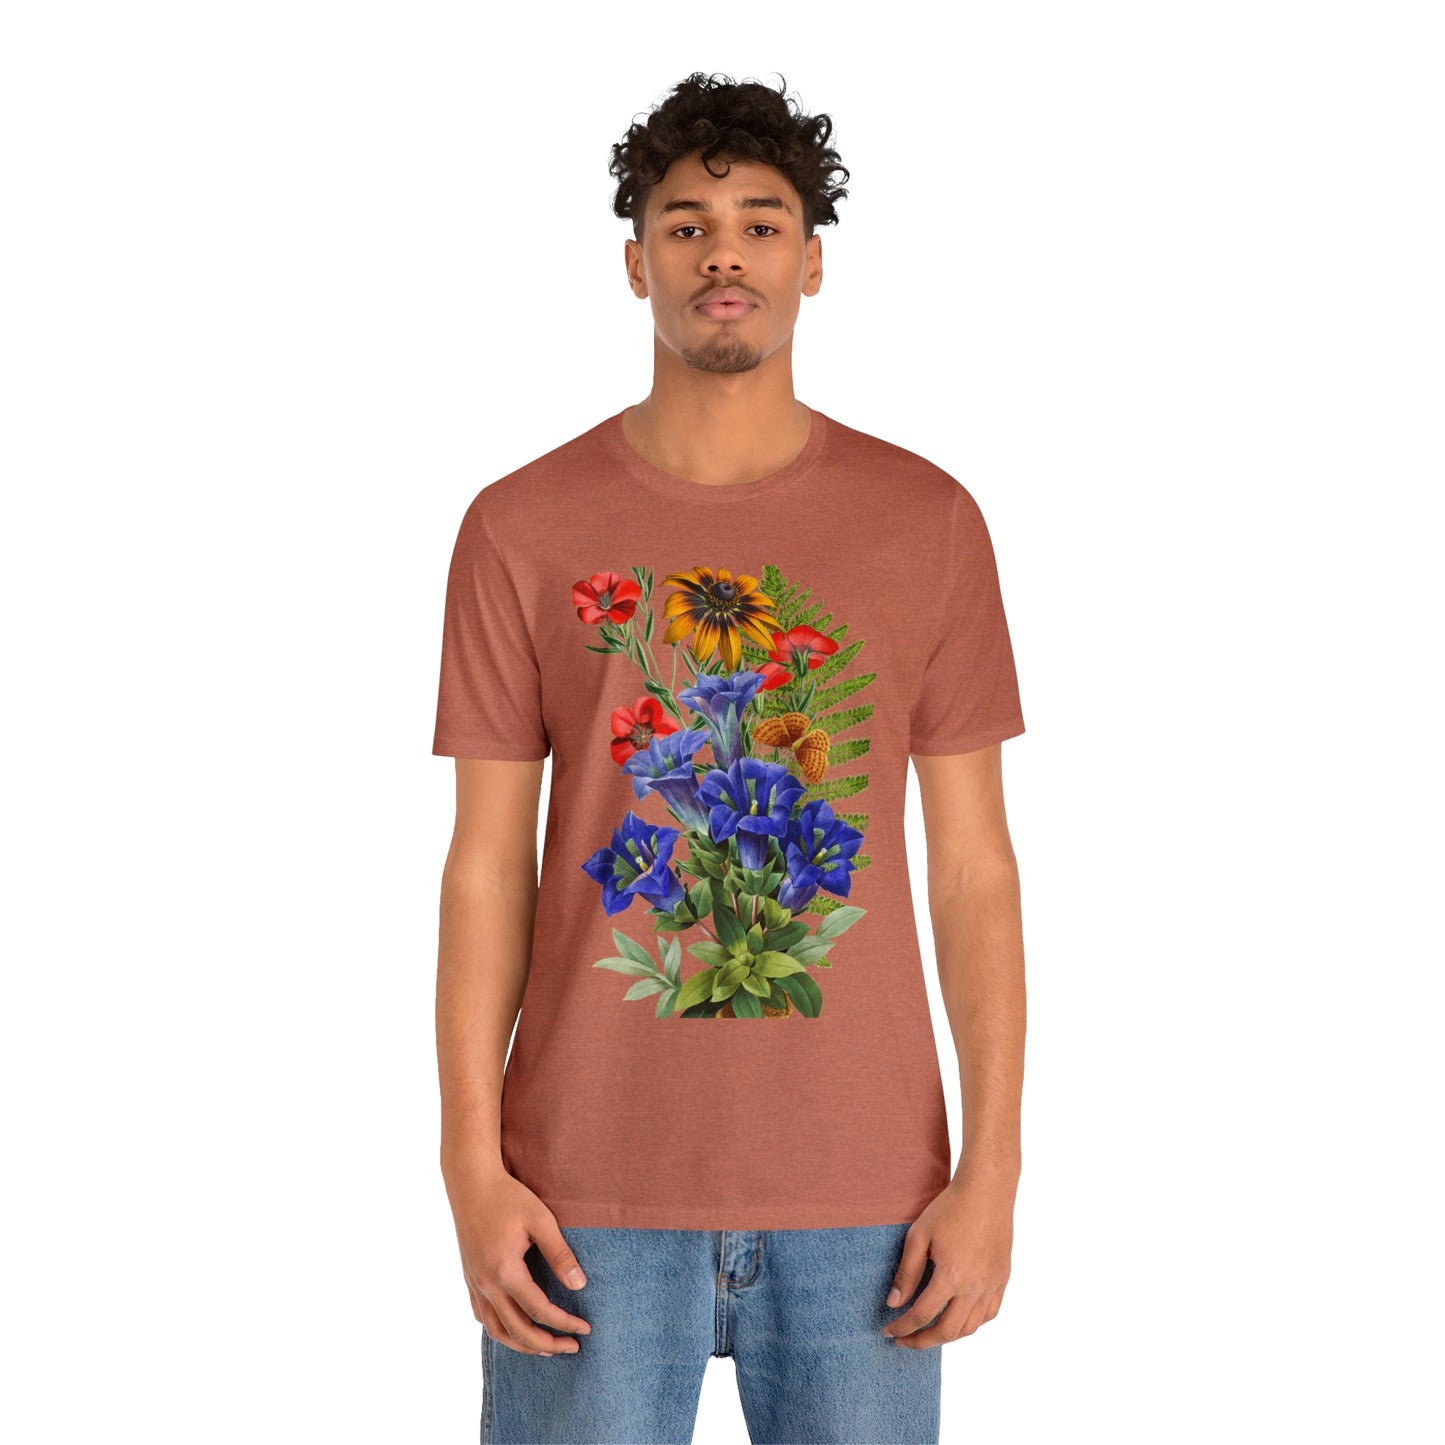 Wildflowers, Wildflower and Meadow Bouquet, T-Shirt, Unisex Jersey Short Sleeve Tee, Boho, CottageCore, Hippie